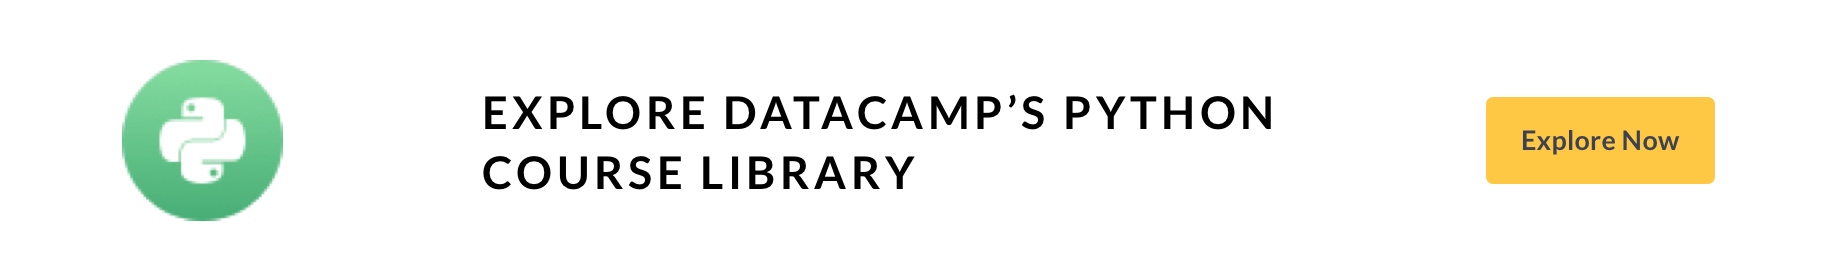 datacamp banner